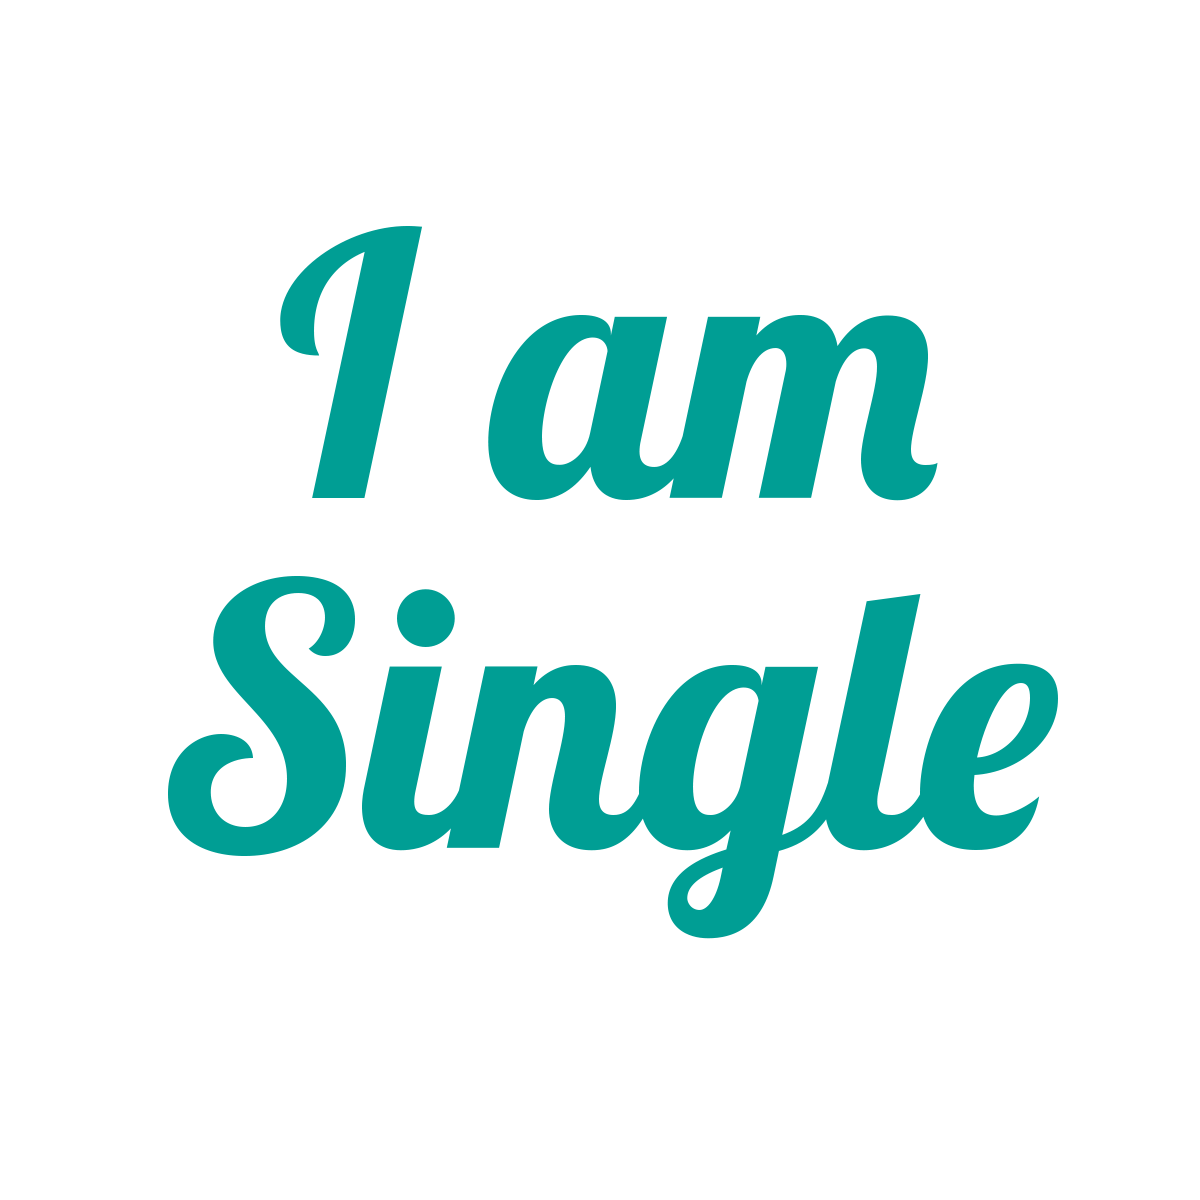 Am single i 9 Signs